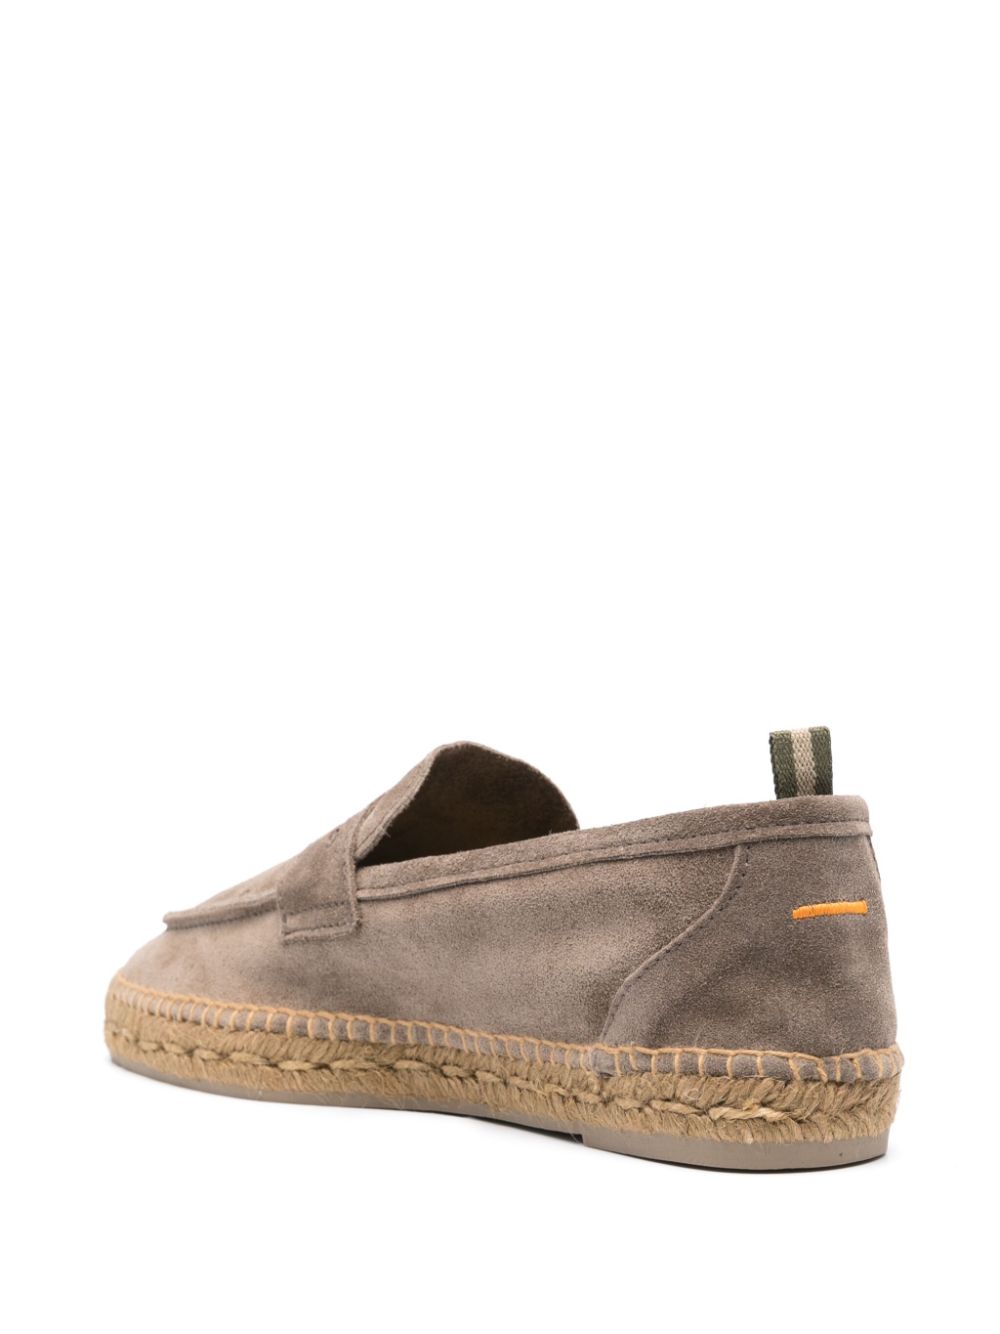 Castaner Flat Shoes Grey